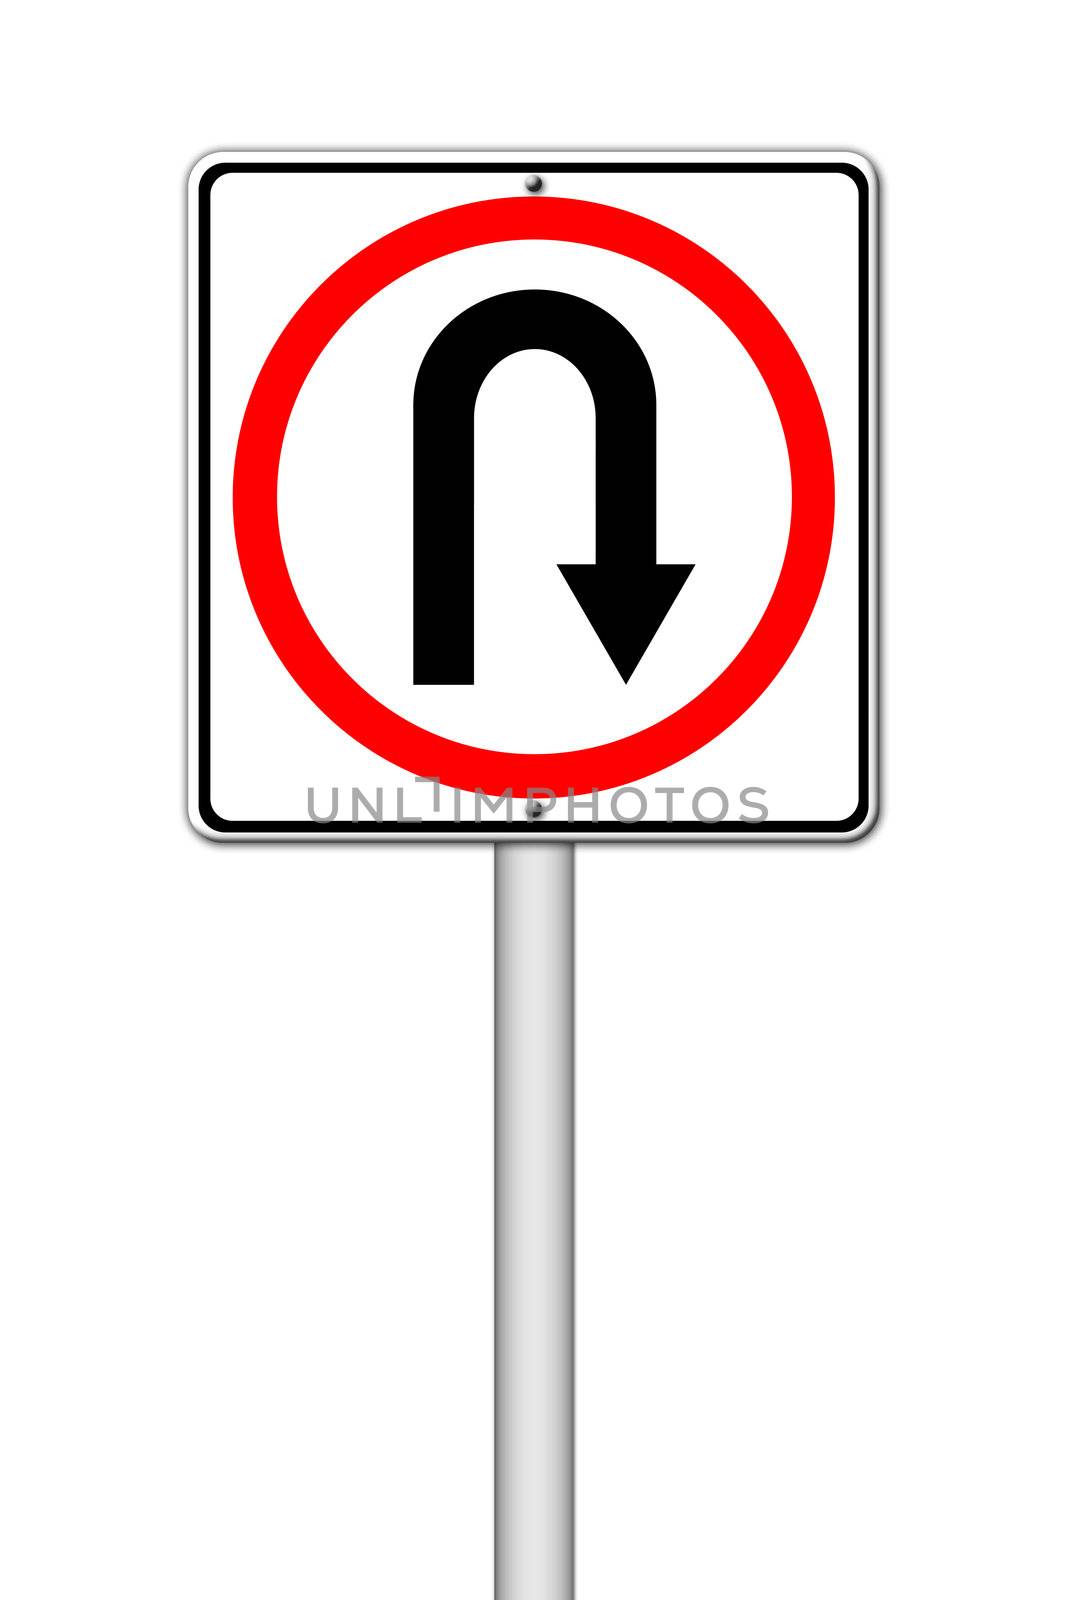 Turn back road sign on white background